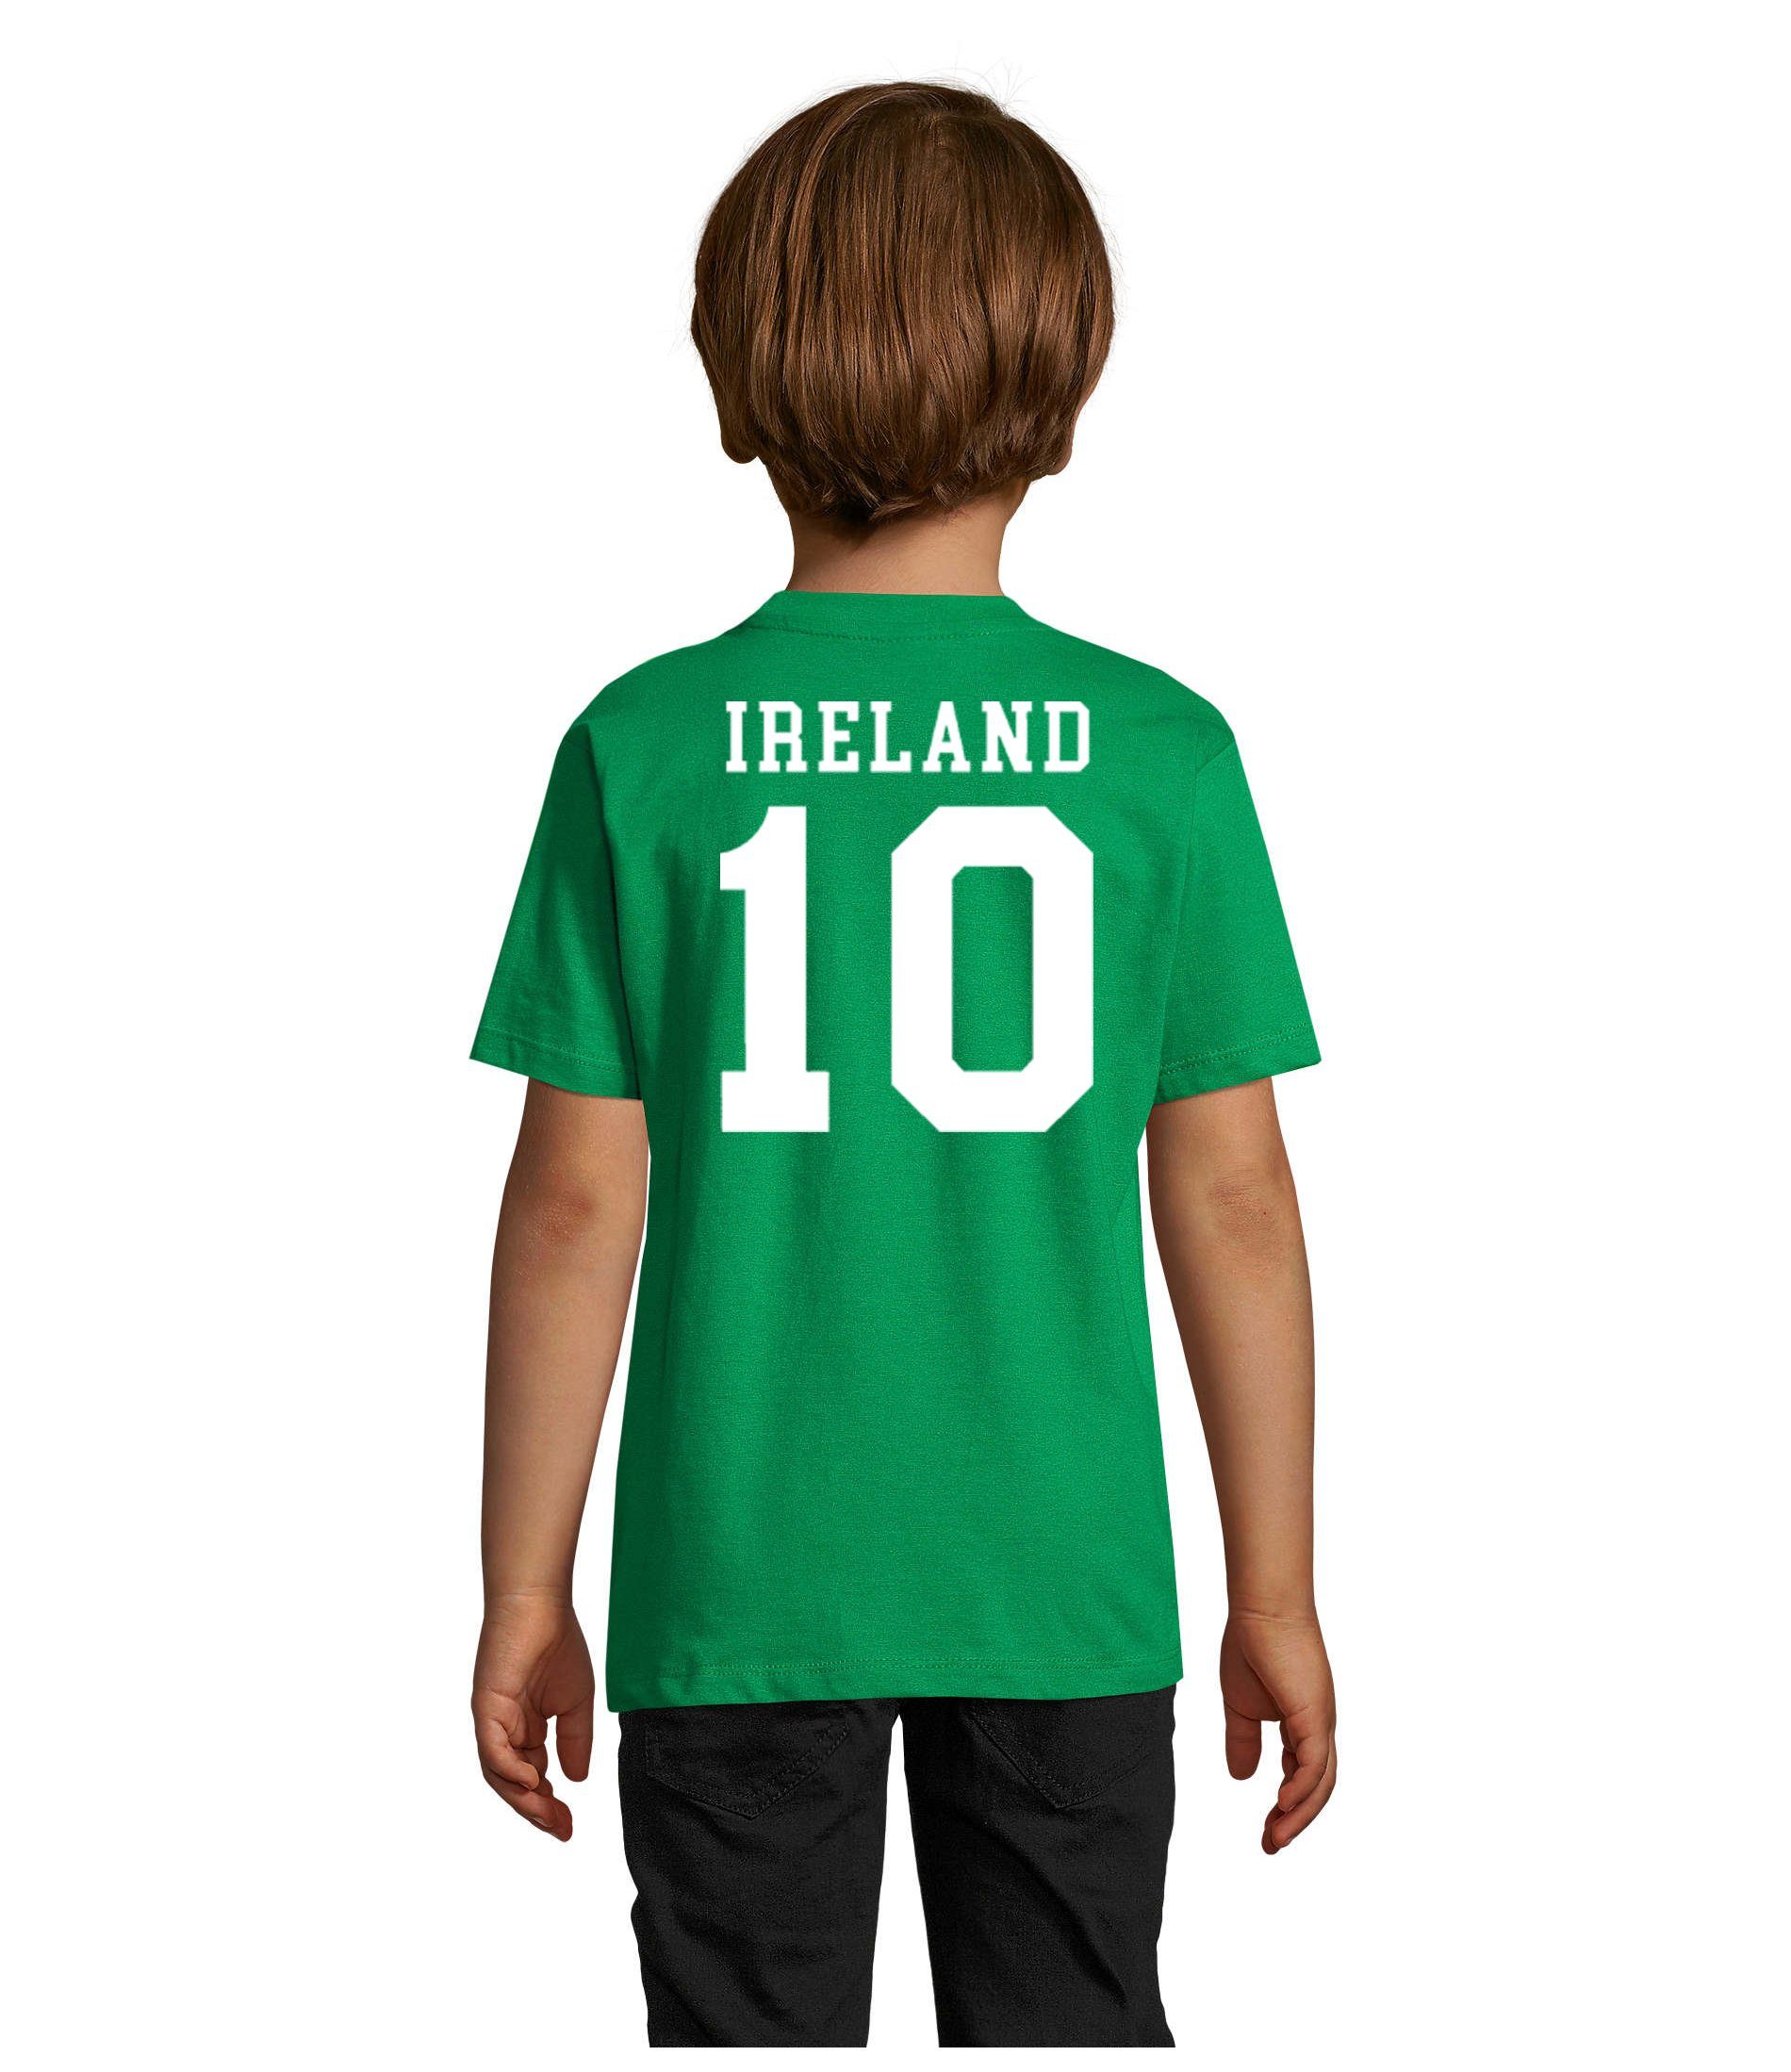 Blondie & Brownie T-Shirt Irland Handball Weltmeister EM WM Weiss/Grün Trikot Sport Fußball Kinder